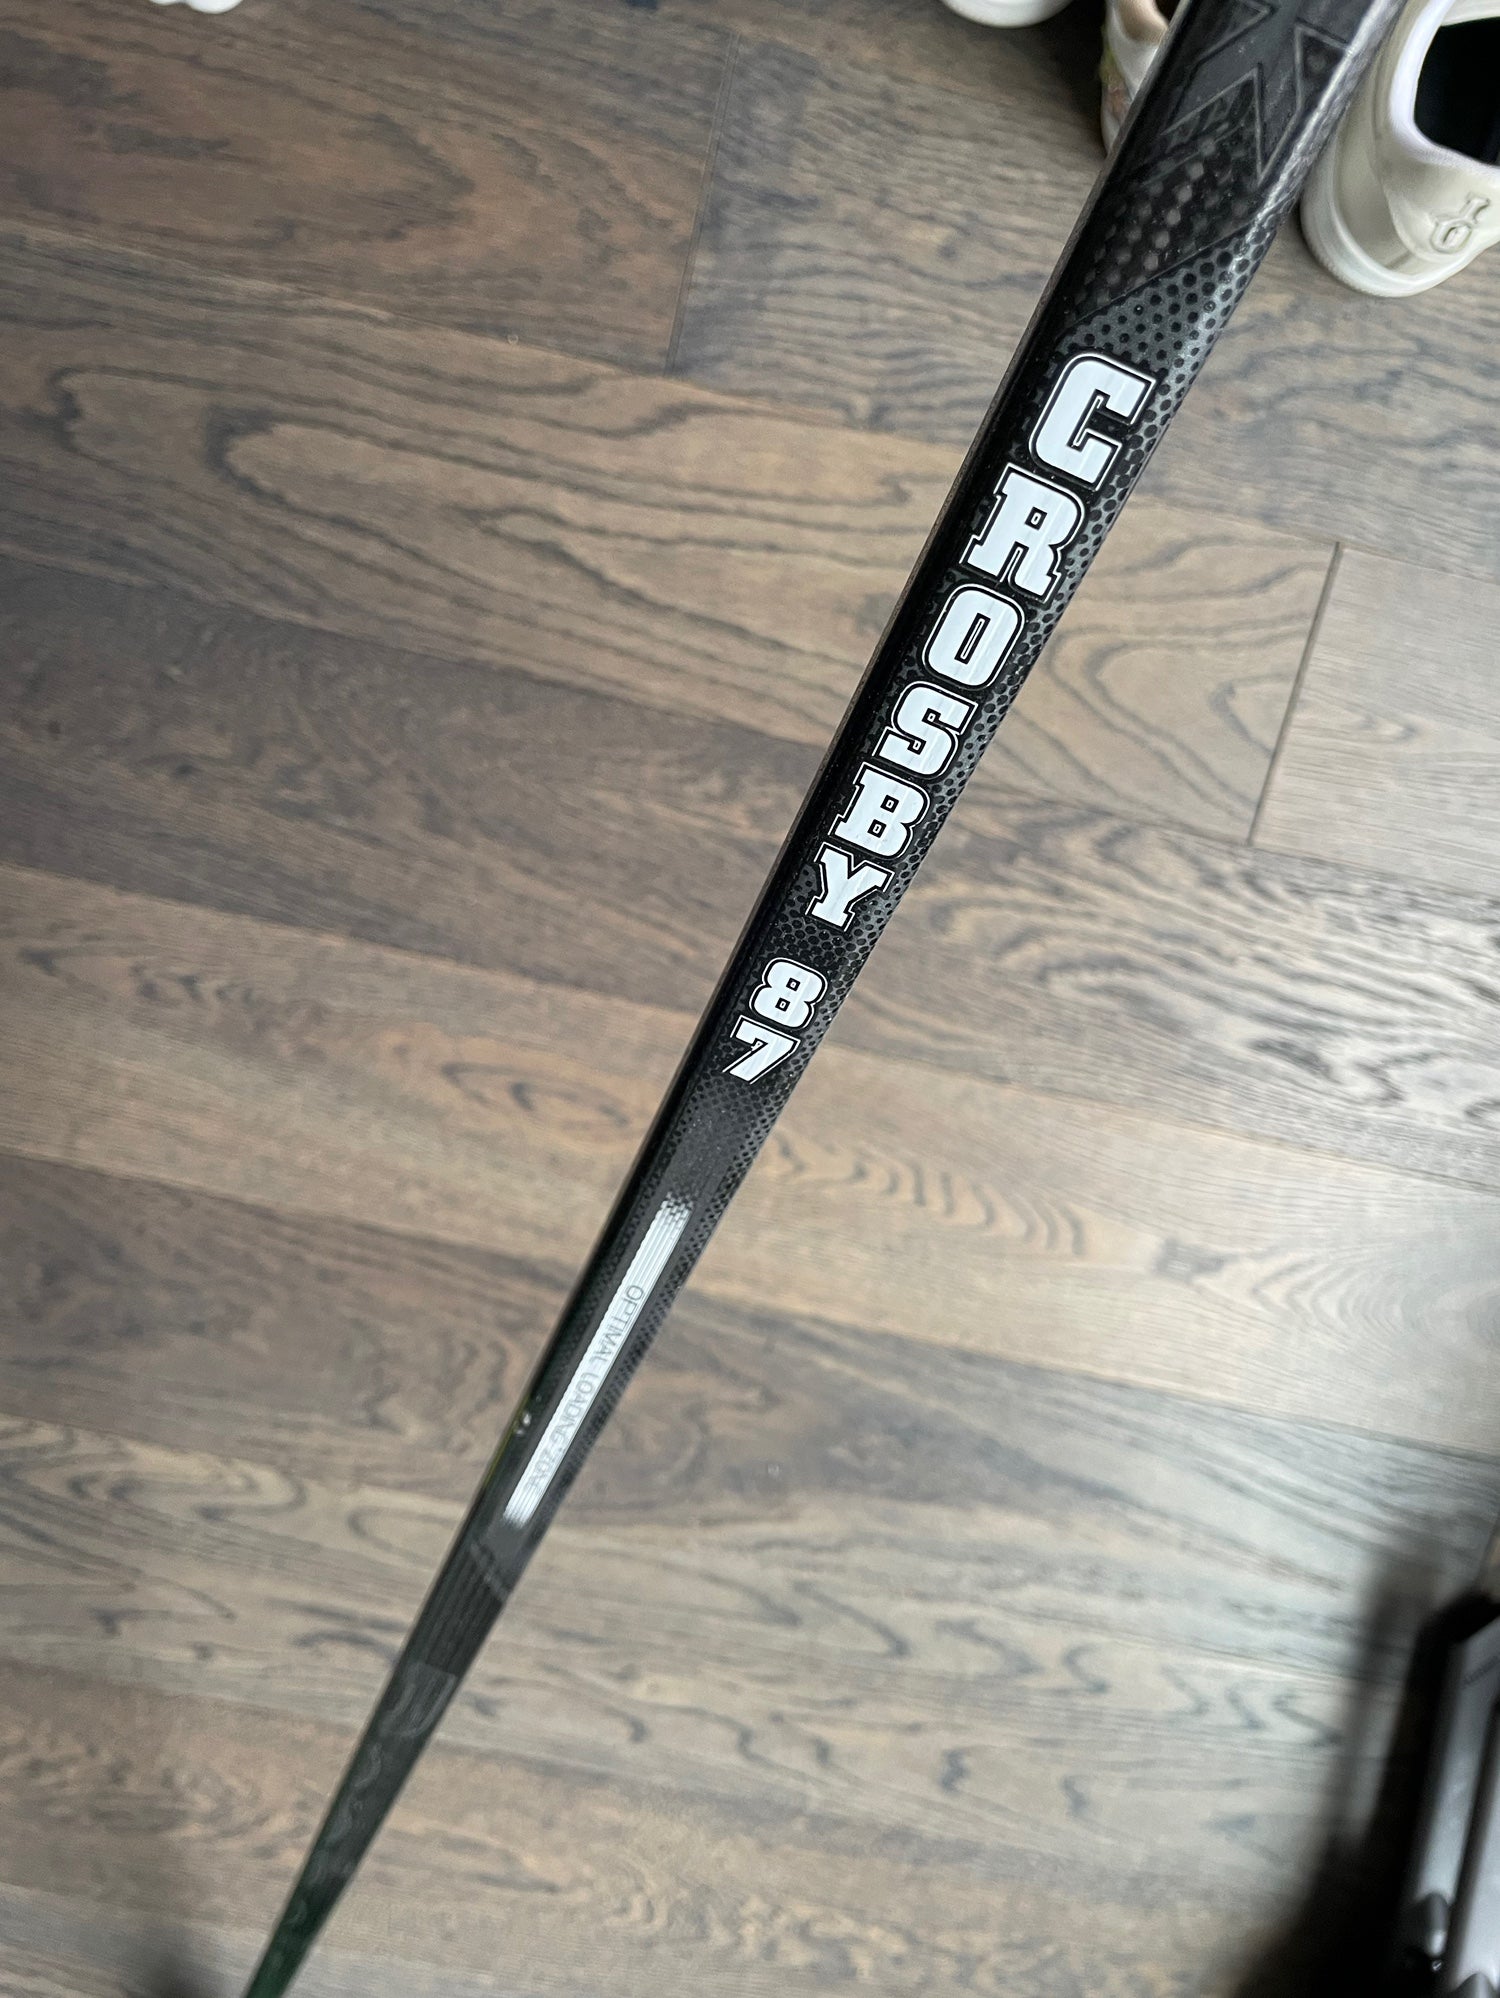 What Stick Does Sidney Crosby Use? – HockeyStickMan